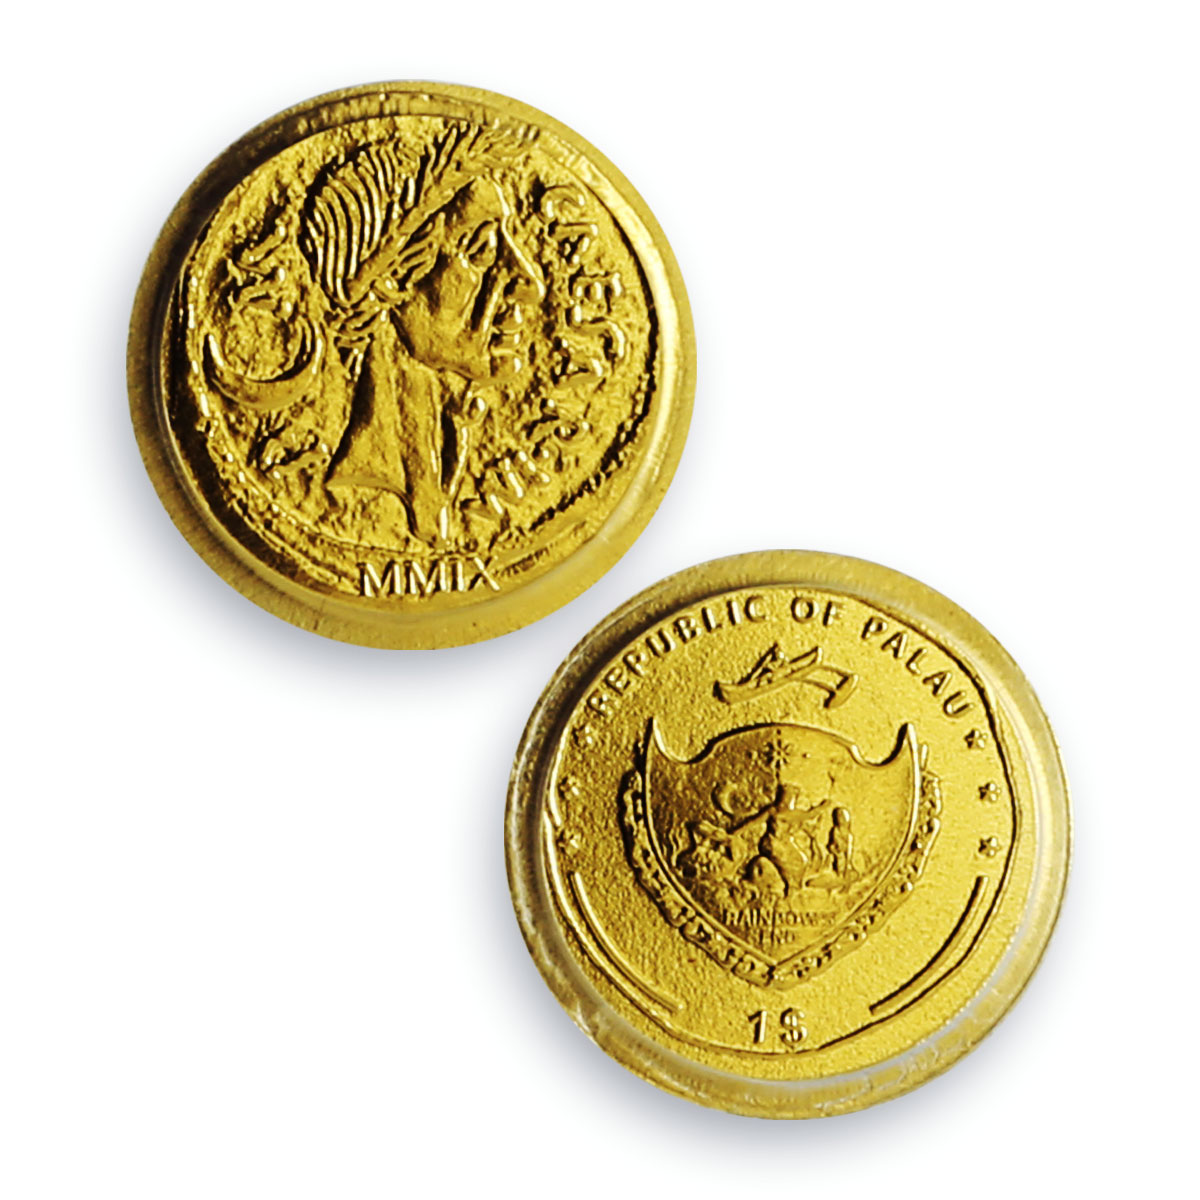 Palau 1 dollar Rome Empire Emperor Caesar Politics MS70 PCGS gold coin 2009